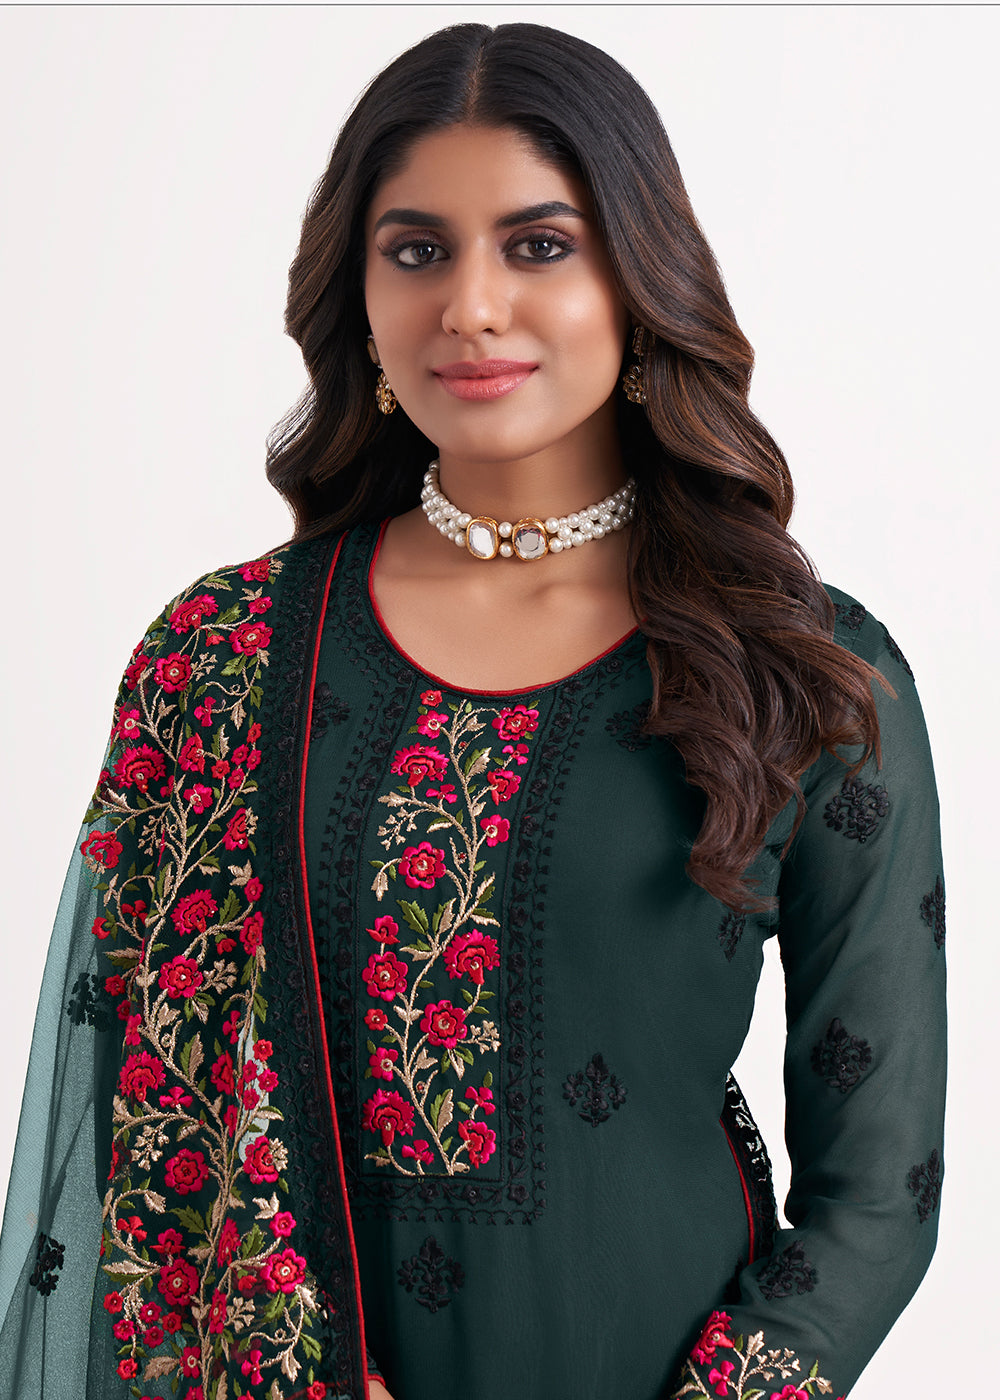 Buy Now Fancy Gorgeous Green Eid Festive Salwar Suit Online in USA, UK, Canada, Germany, Australia & Worldwide at Empress Clothing.